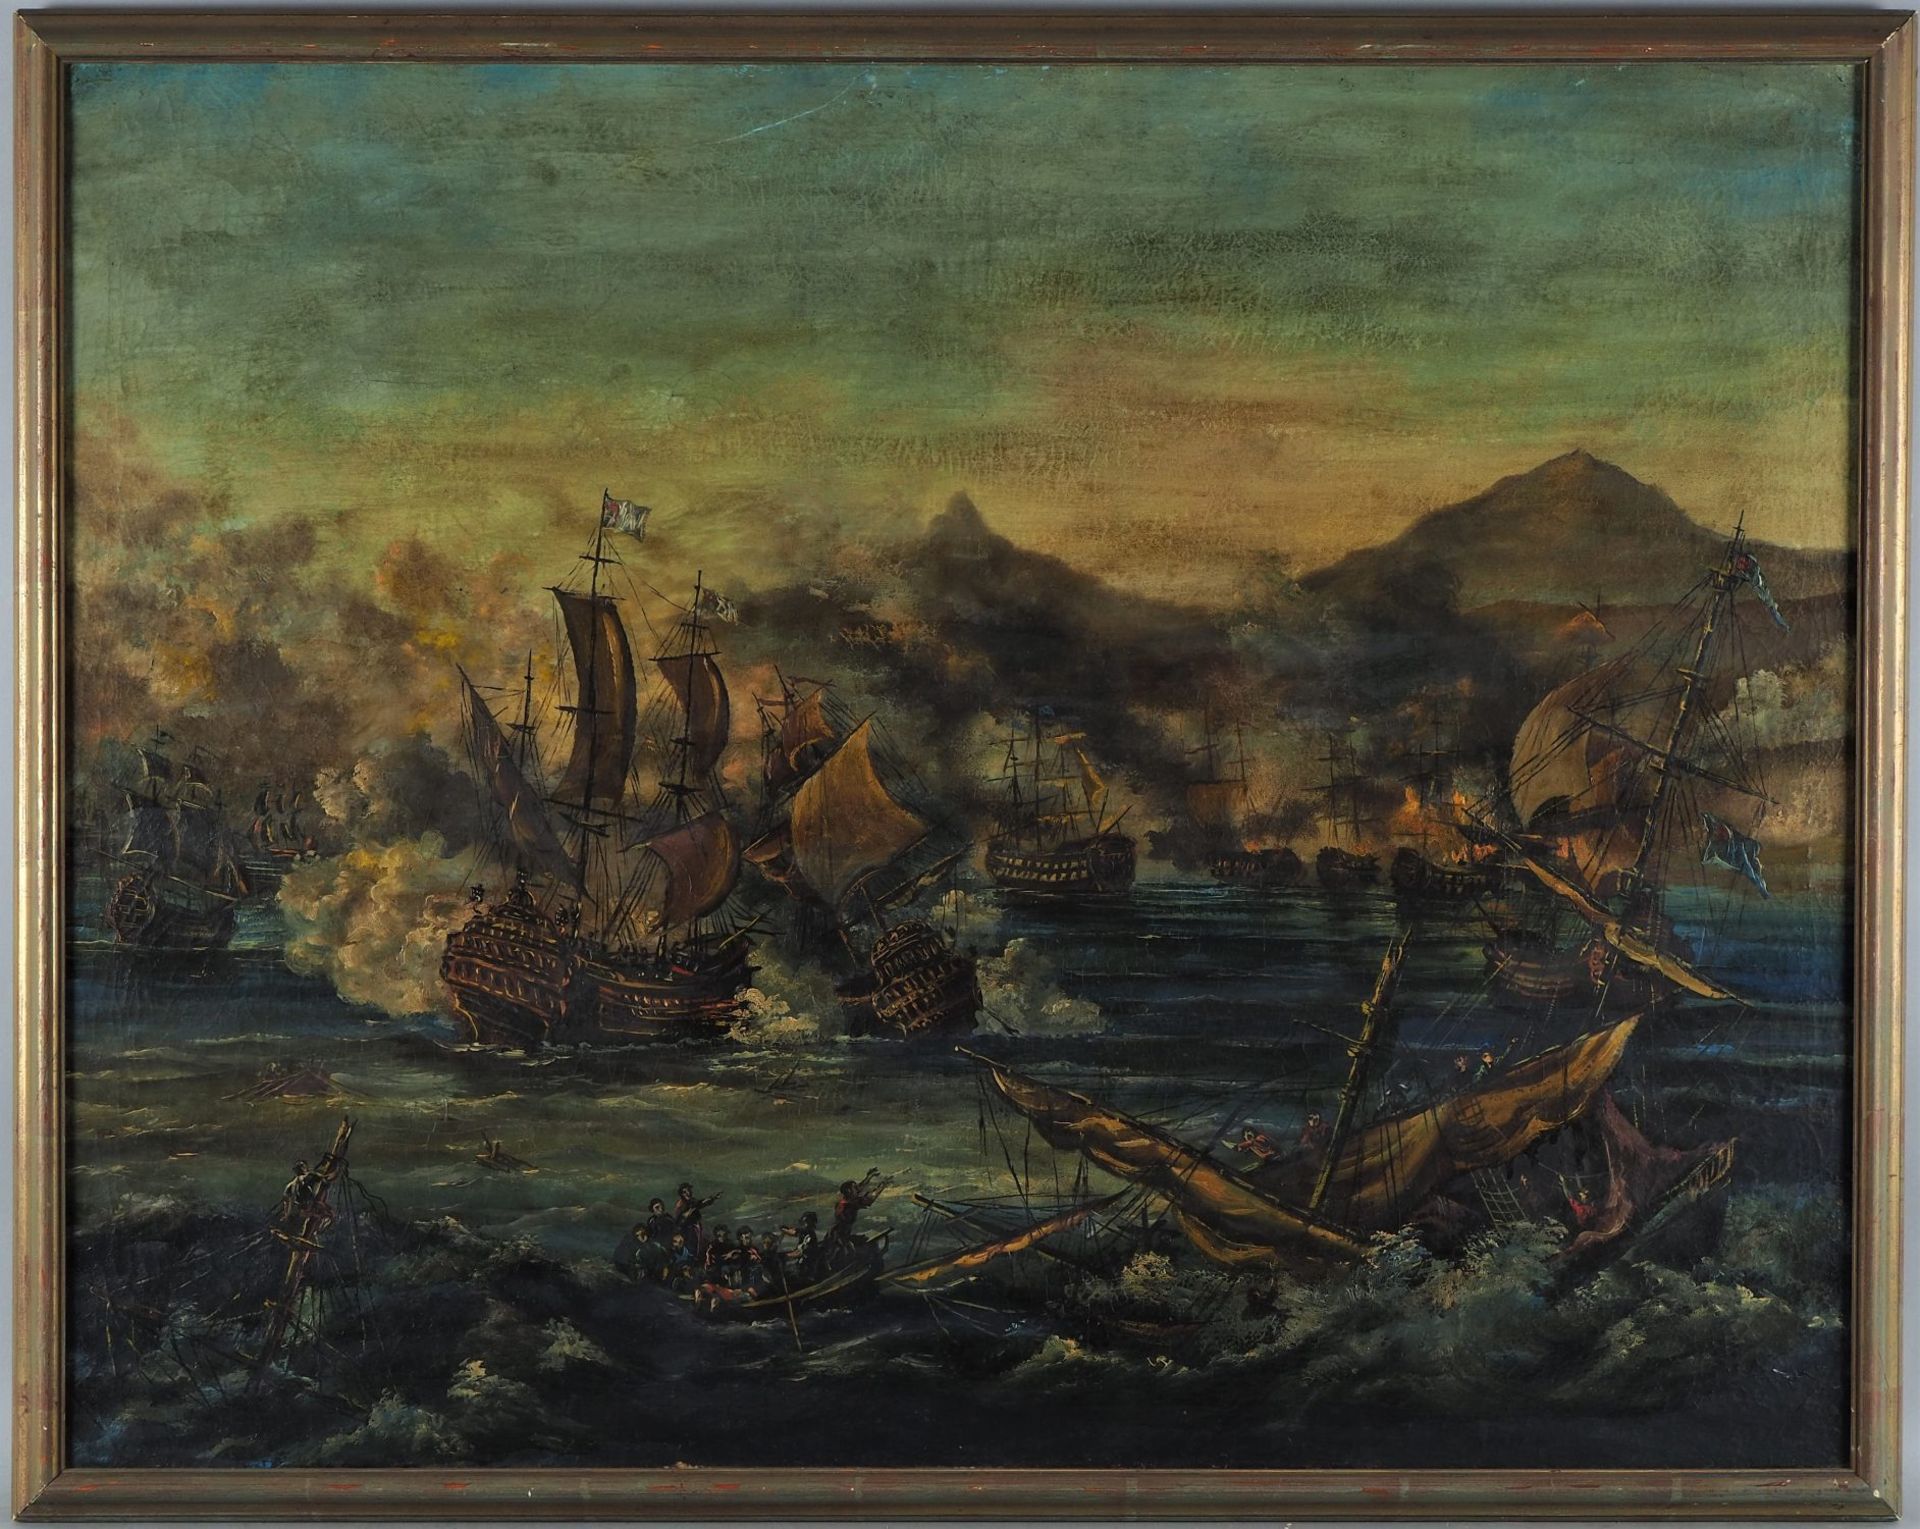 Gemälde Seeschlacht, nach Altmeister, 19. Jh.